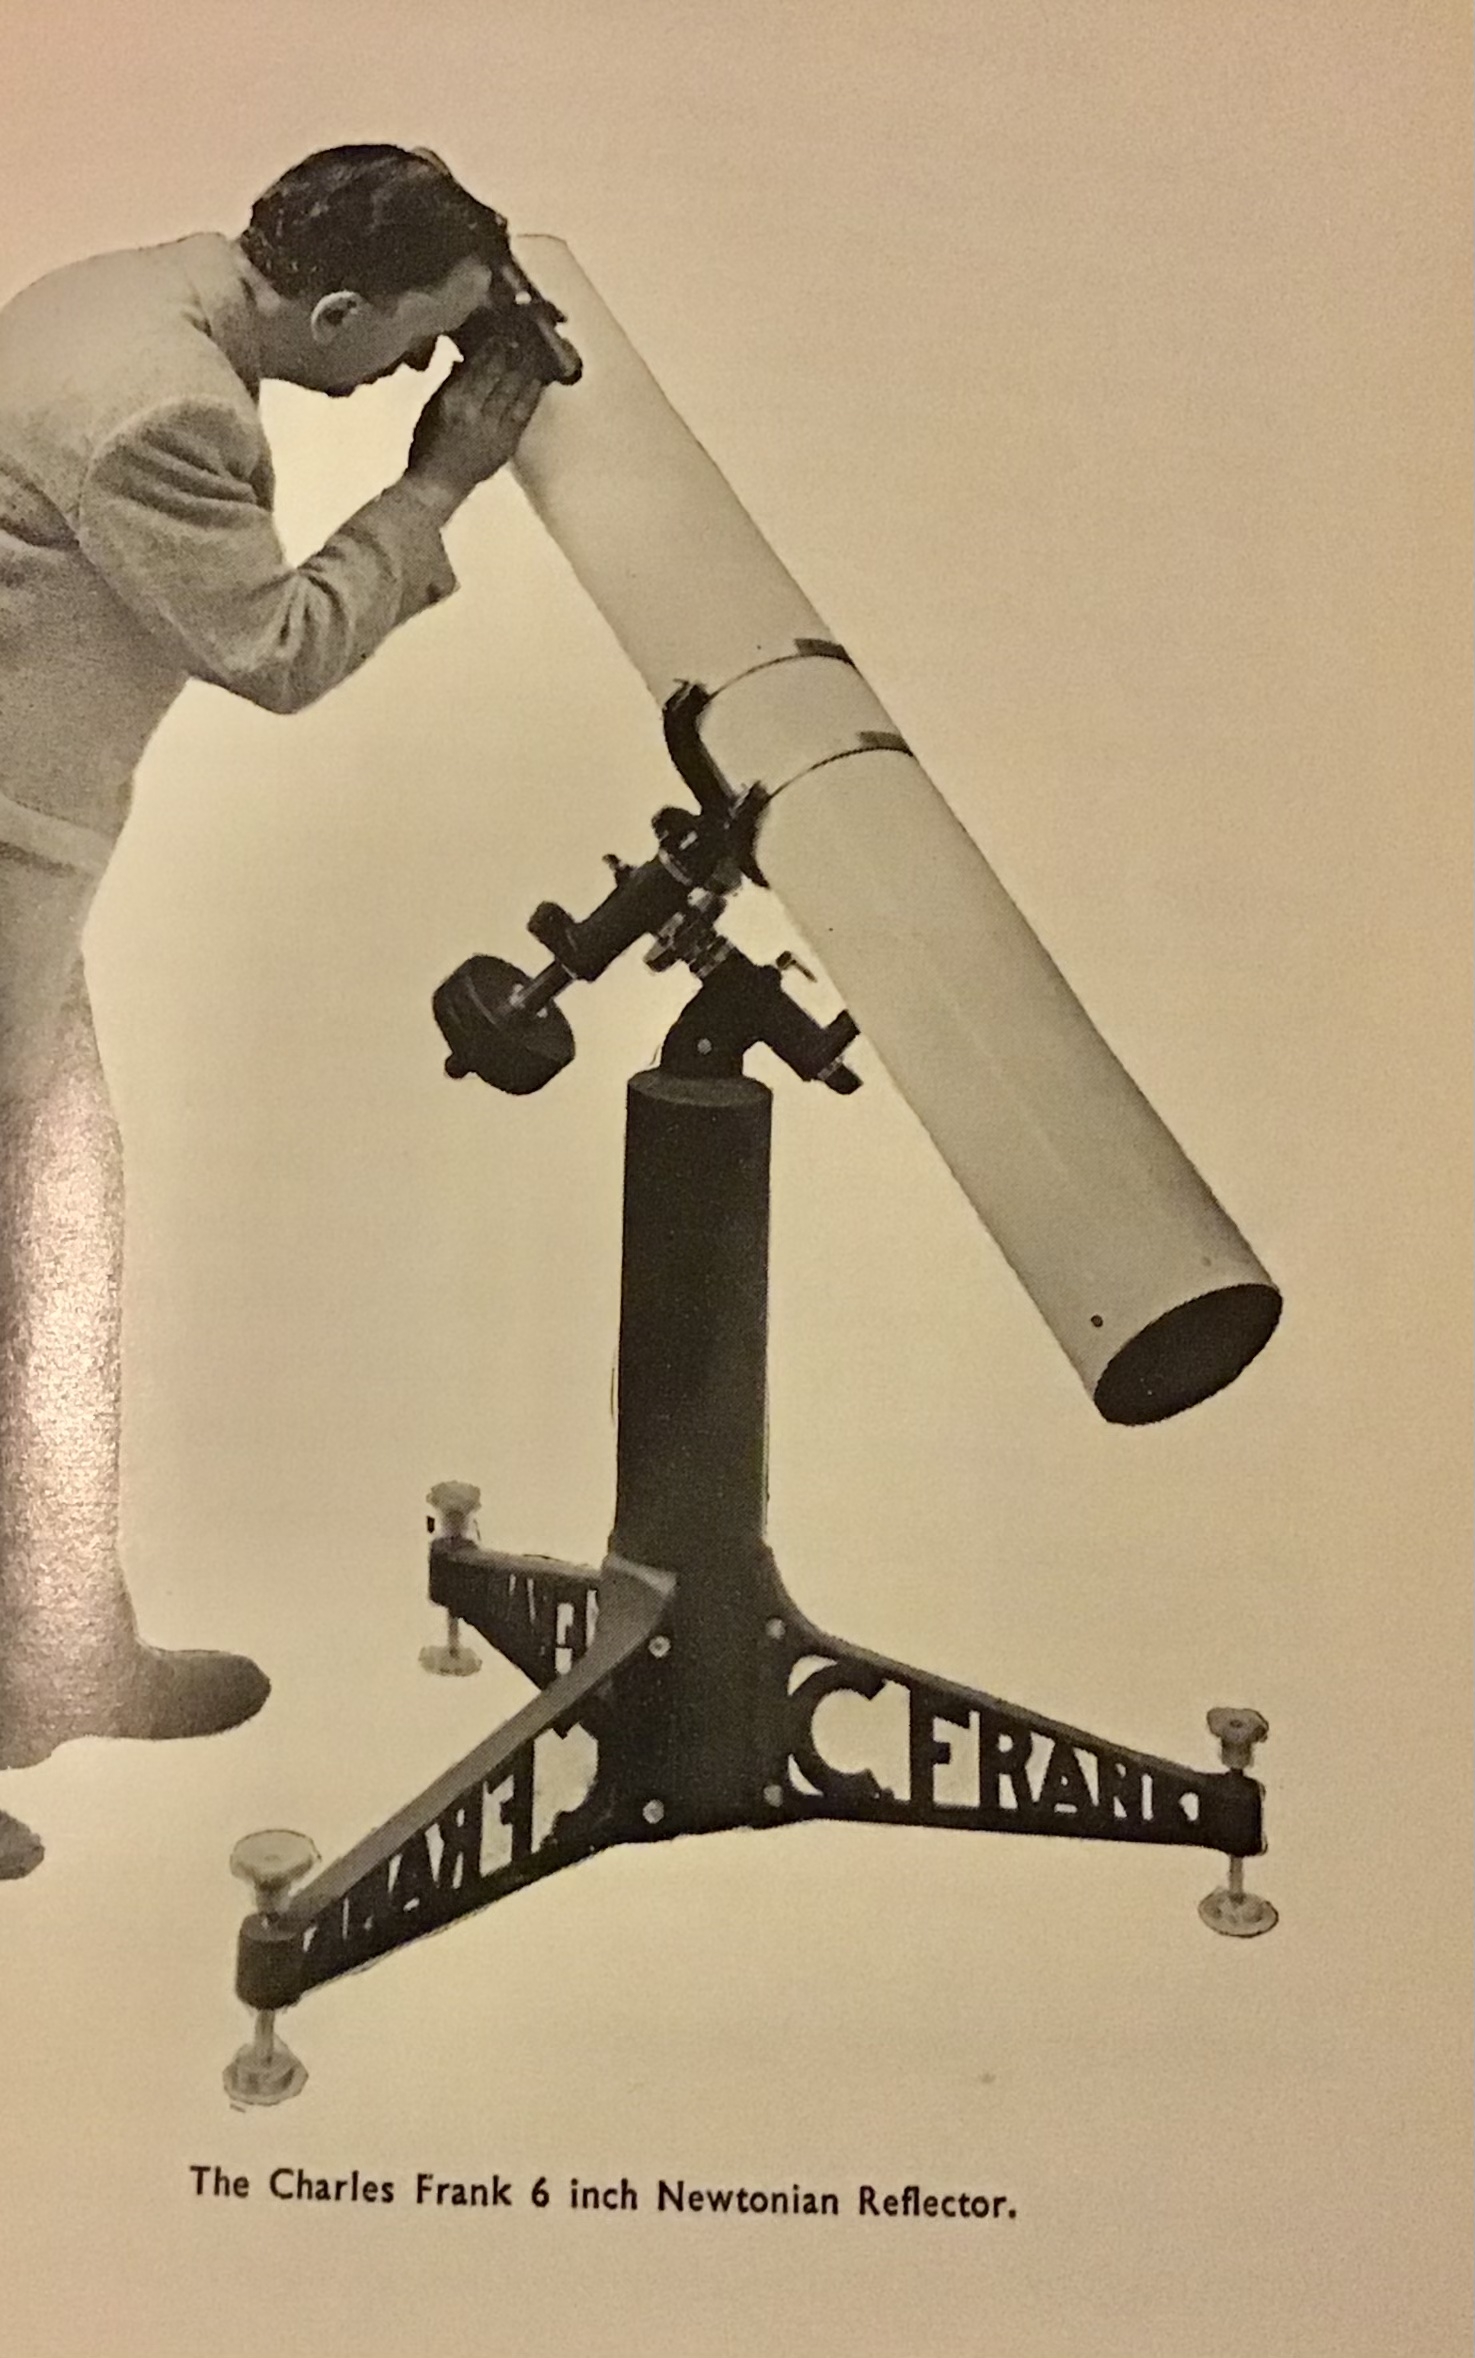 Viool Ondeugd Steen Frank's Book of the Telescope - The Astro Lounge - Stargazers Lounge